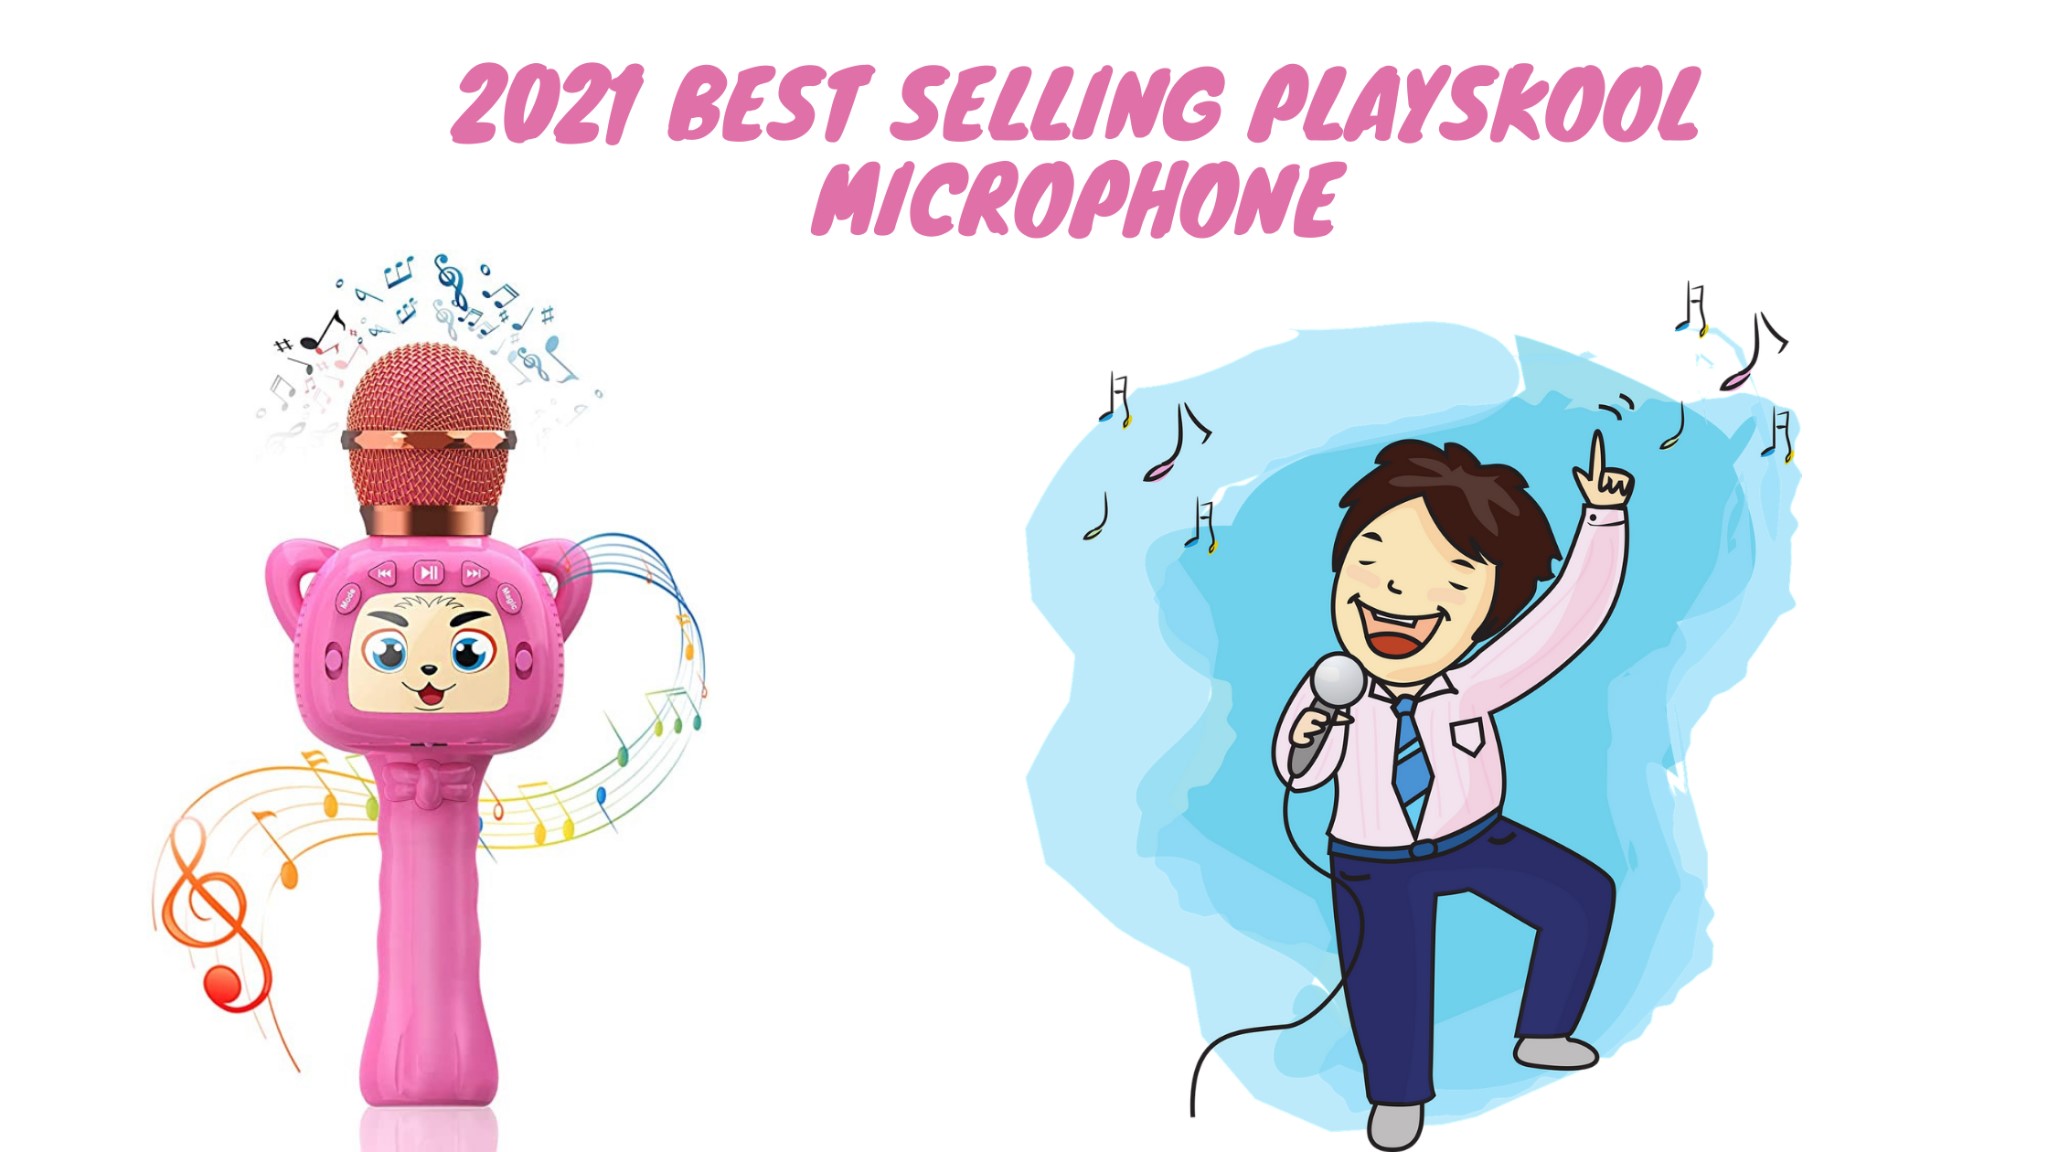 microphone playkool le plus vendu